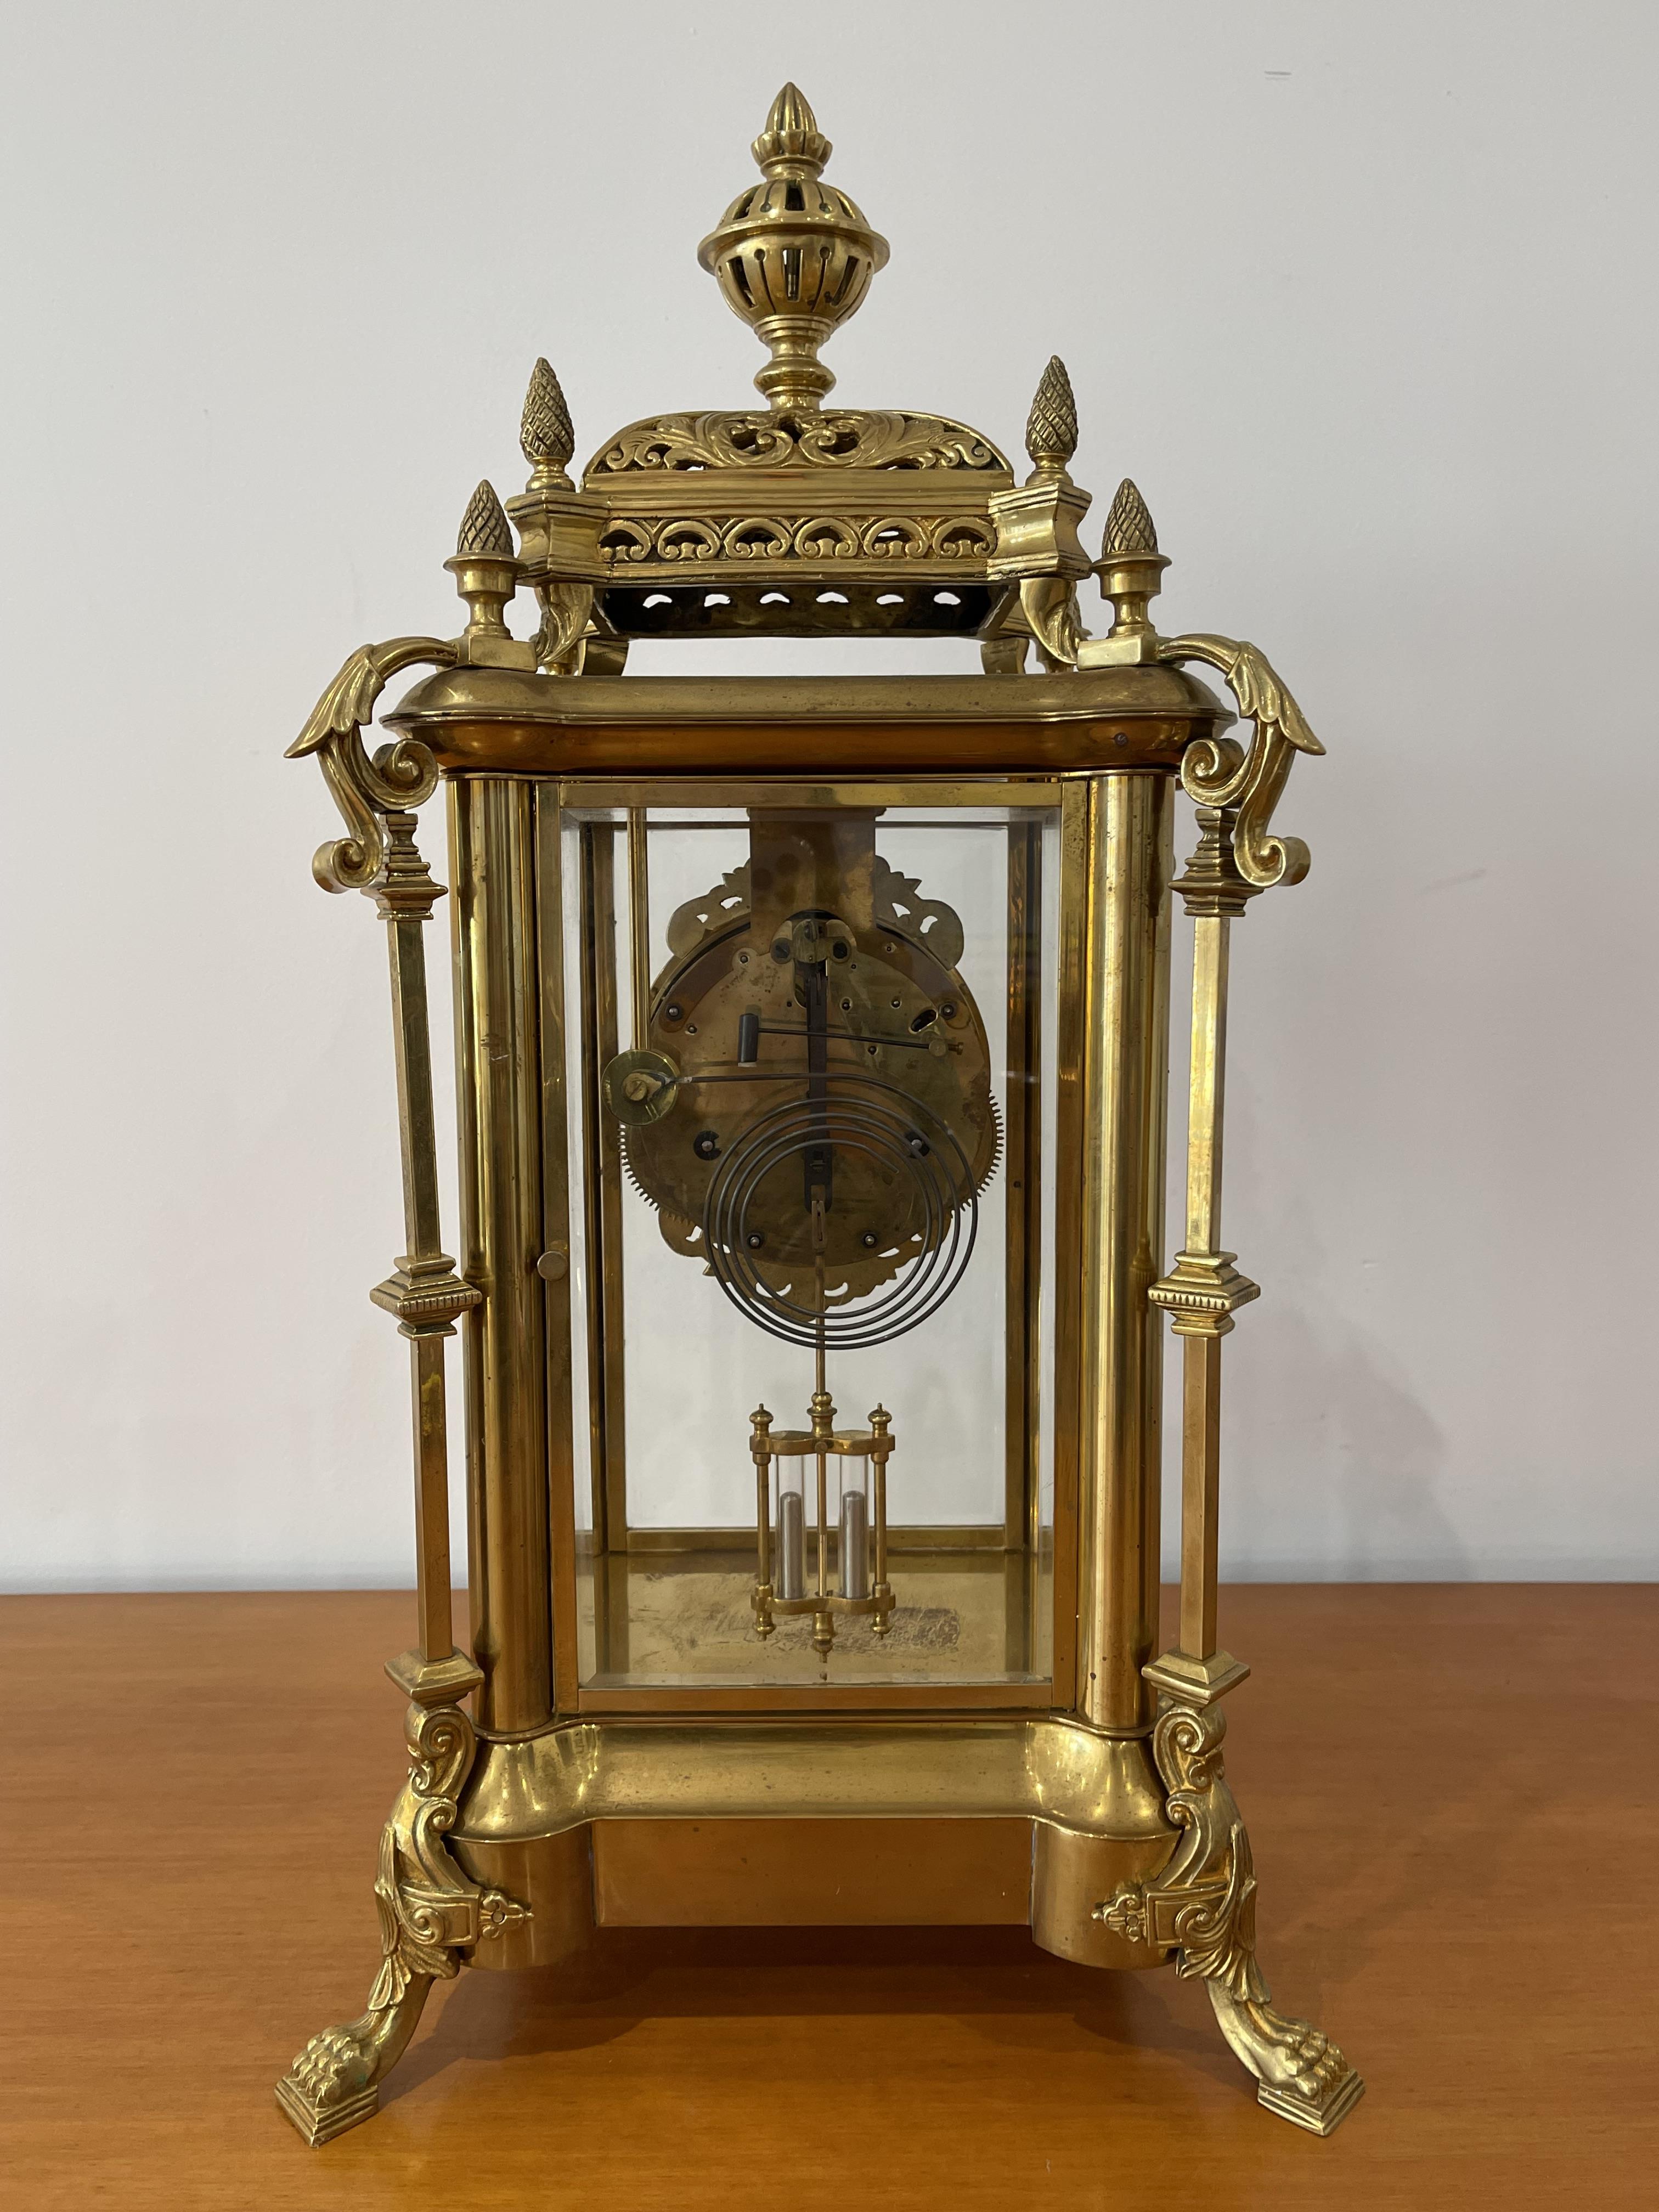 Stunning 8 Day Striking Brass Four Glass Ansonia Mantel Clock - Image 8 of 21